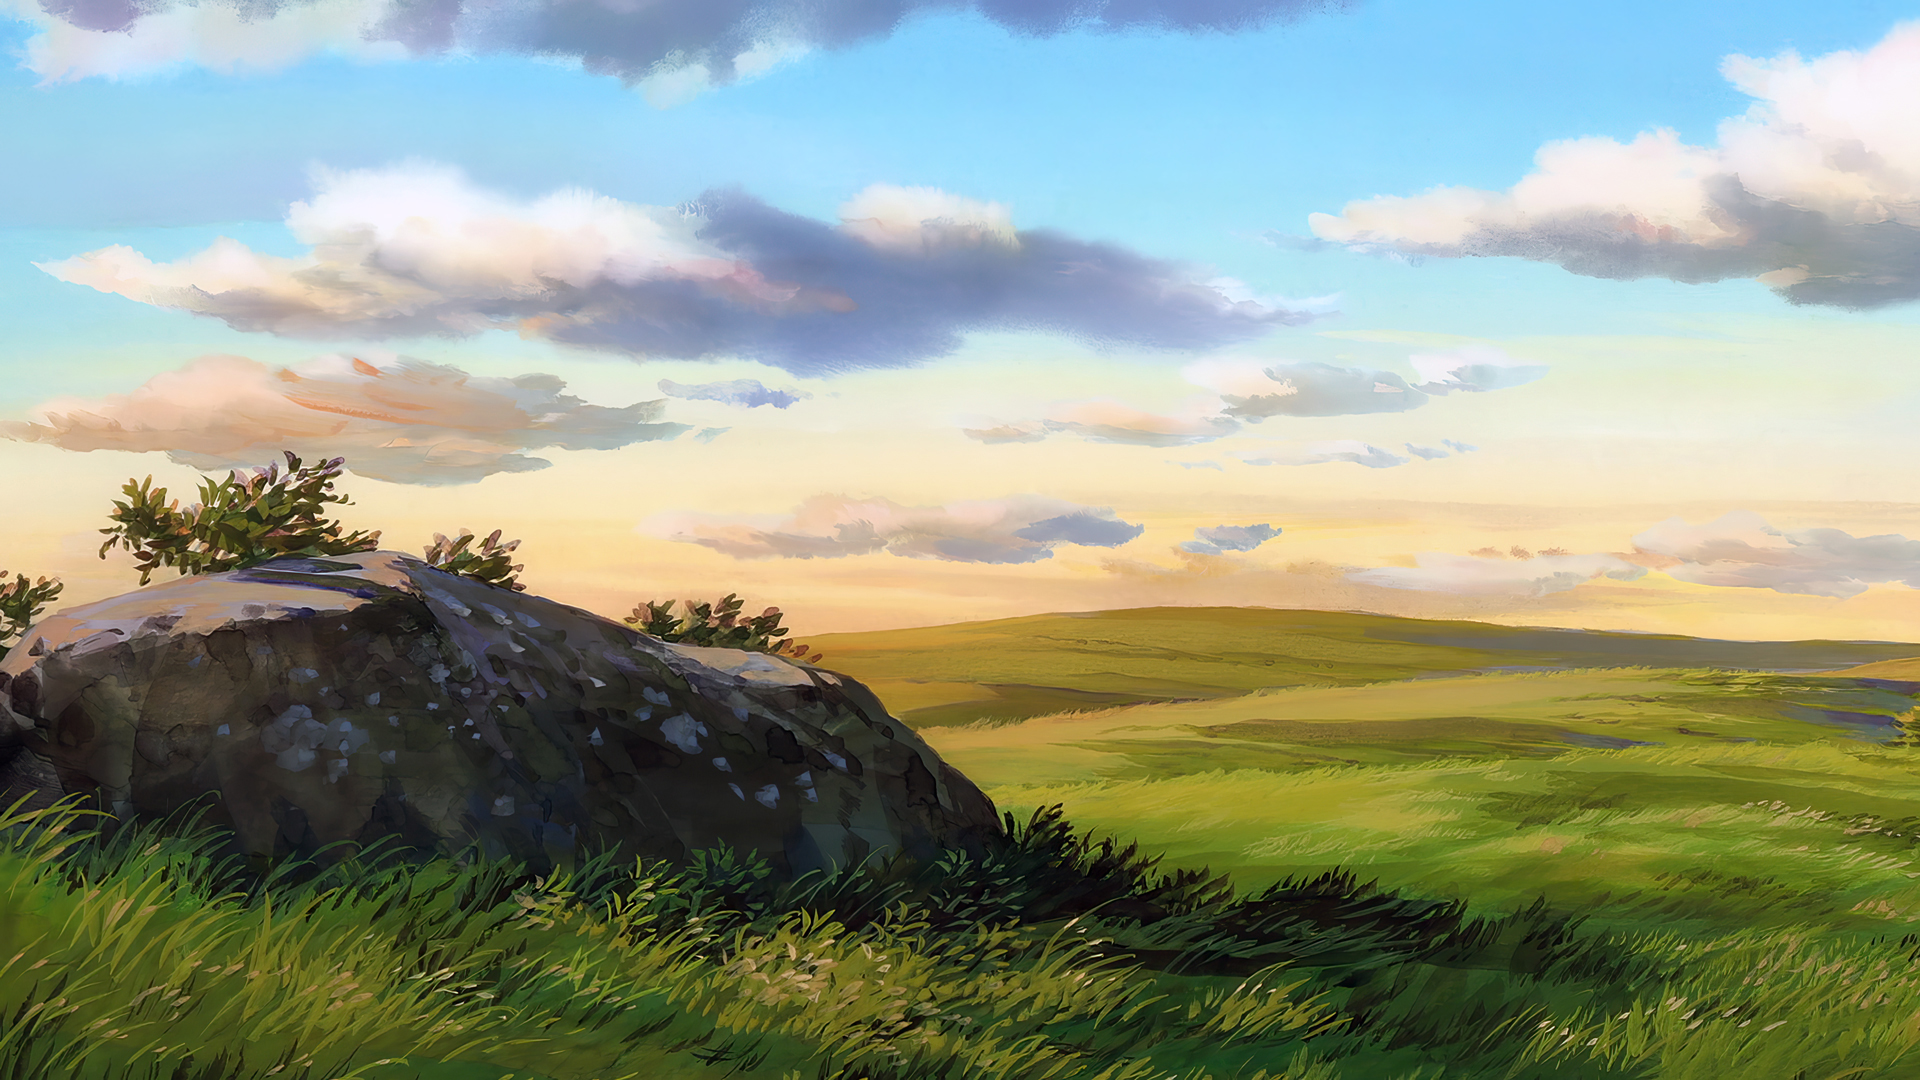 Tales From Earthsea Animated Movies Anime Animation Film Stills Studio Ghibli Field Rocks Sky Clouds 1920x1080